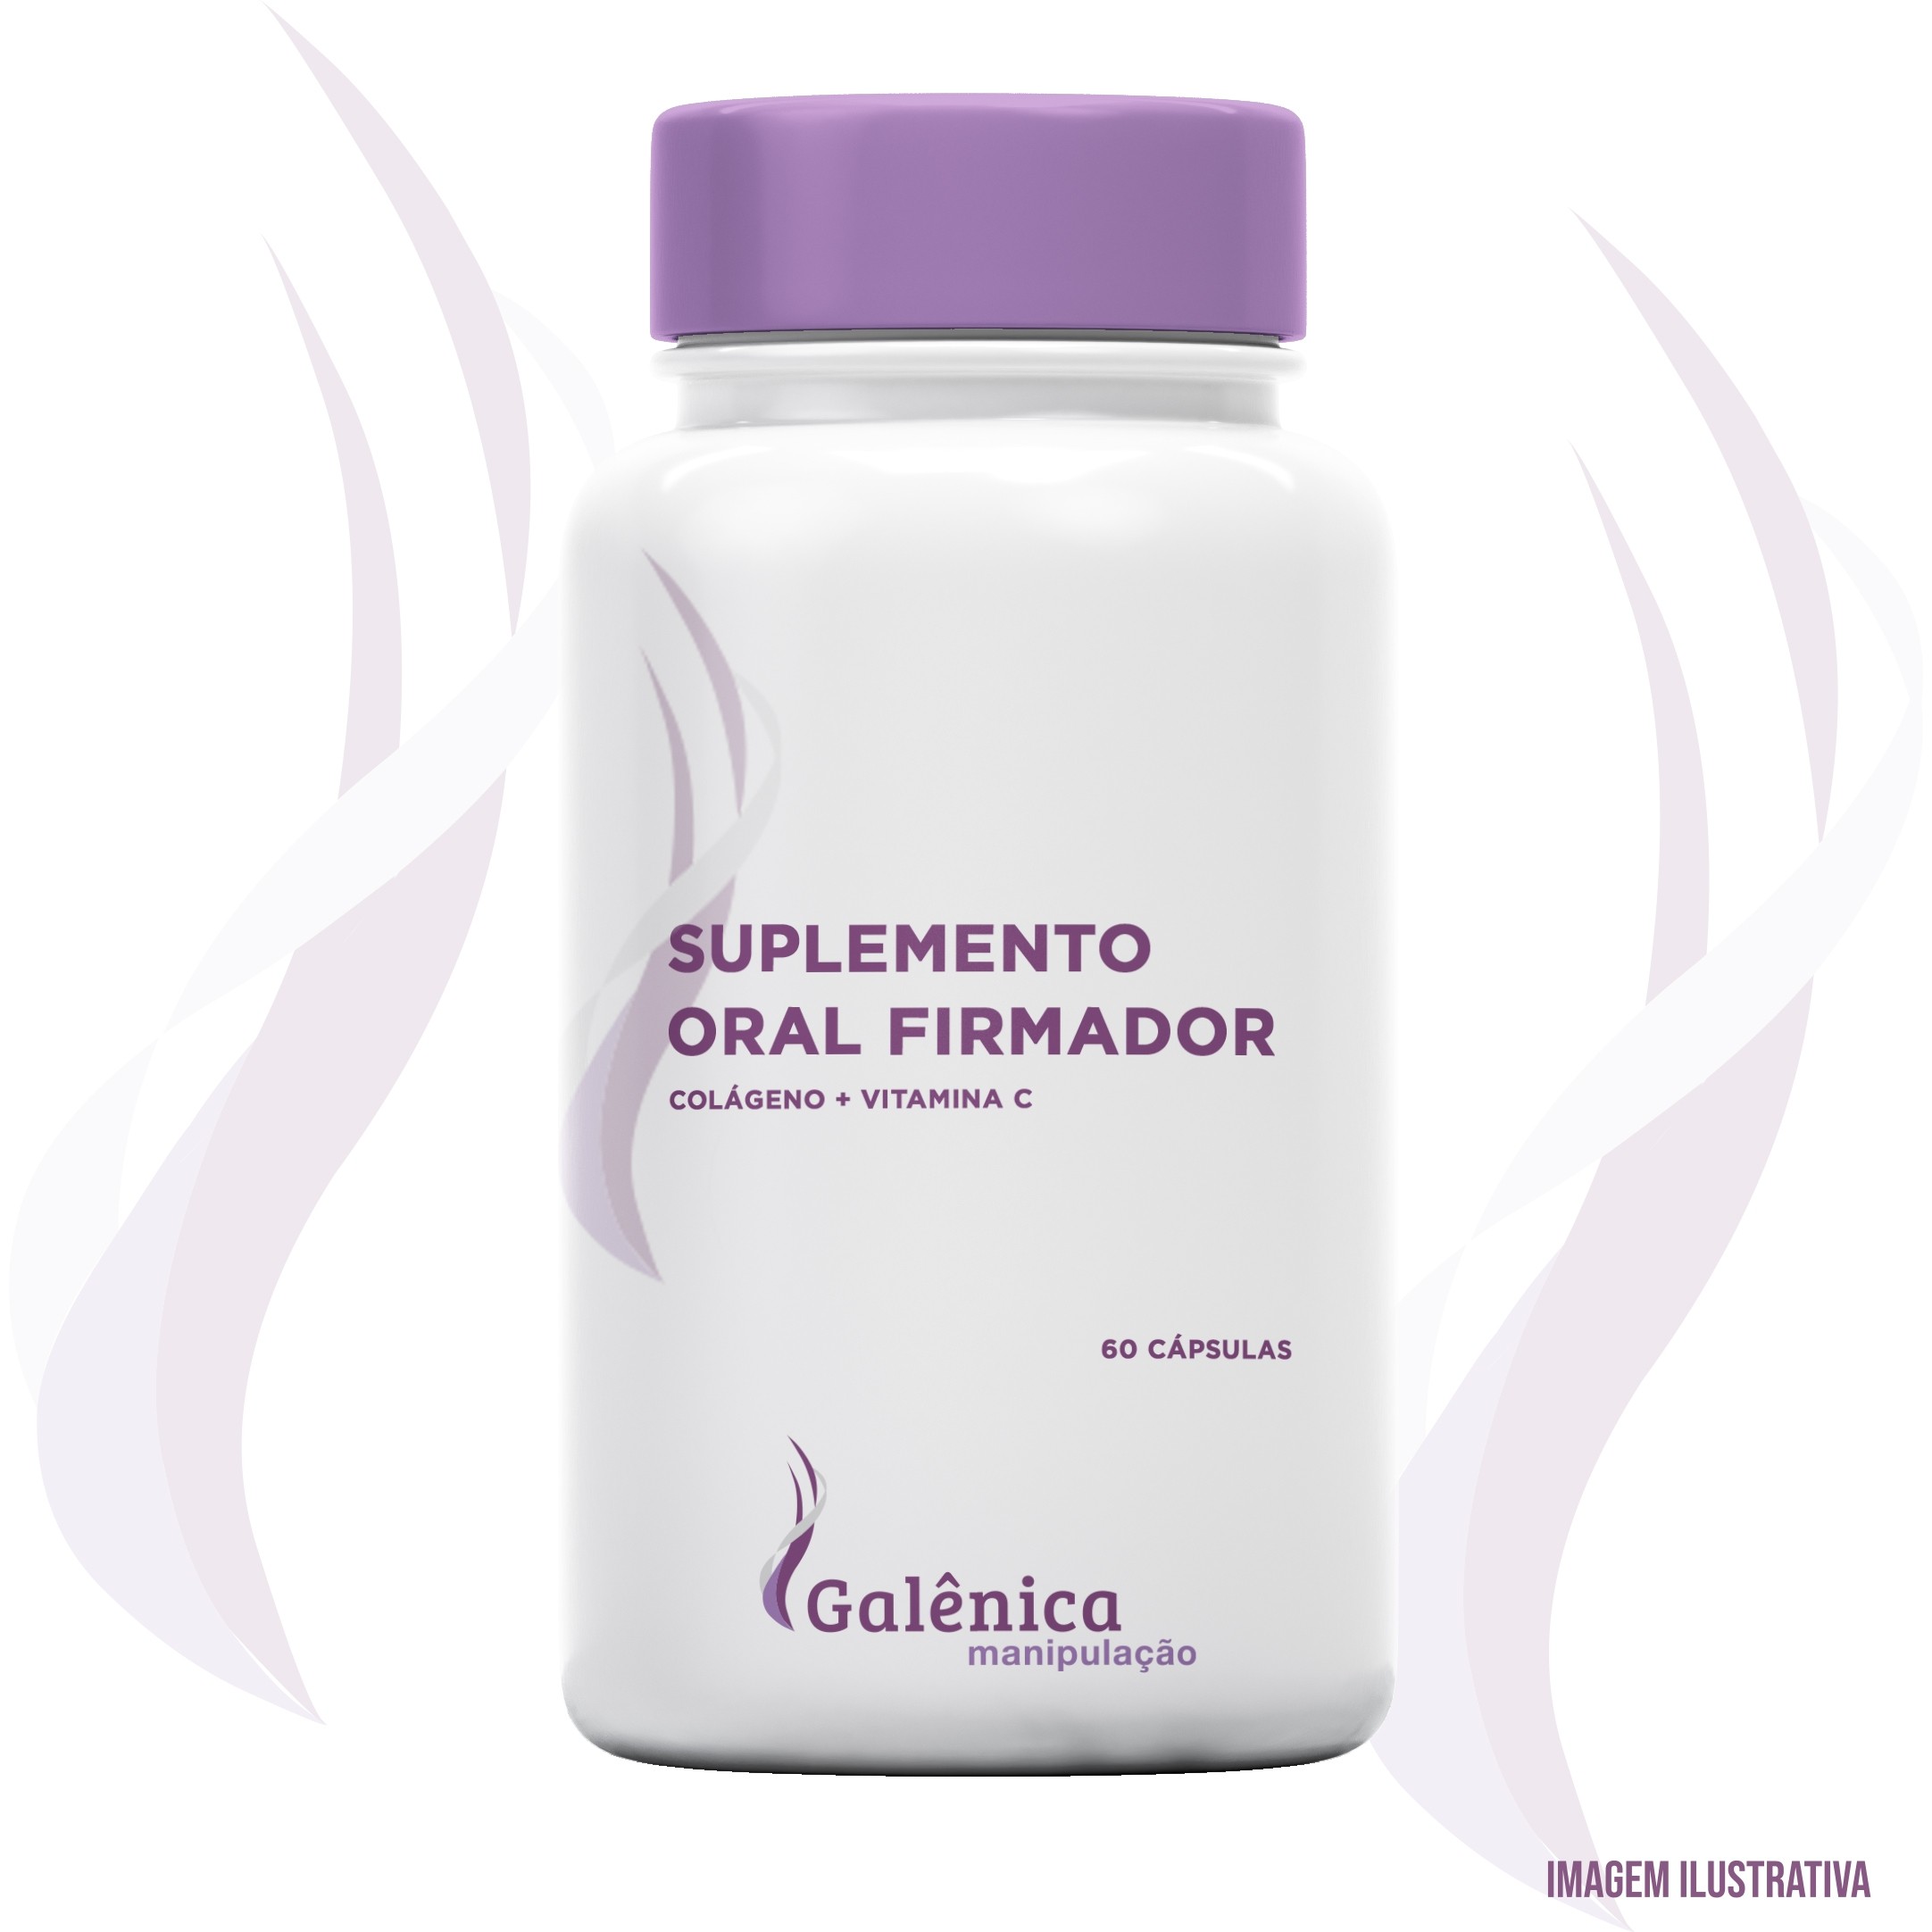 Suplemento oral firmador - Colágeno + Vitamina C - 60 cápsulas